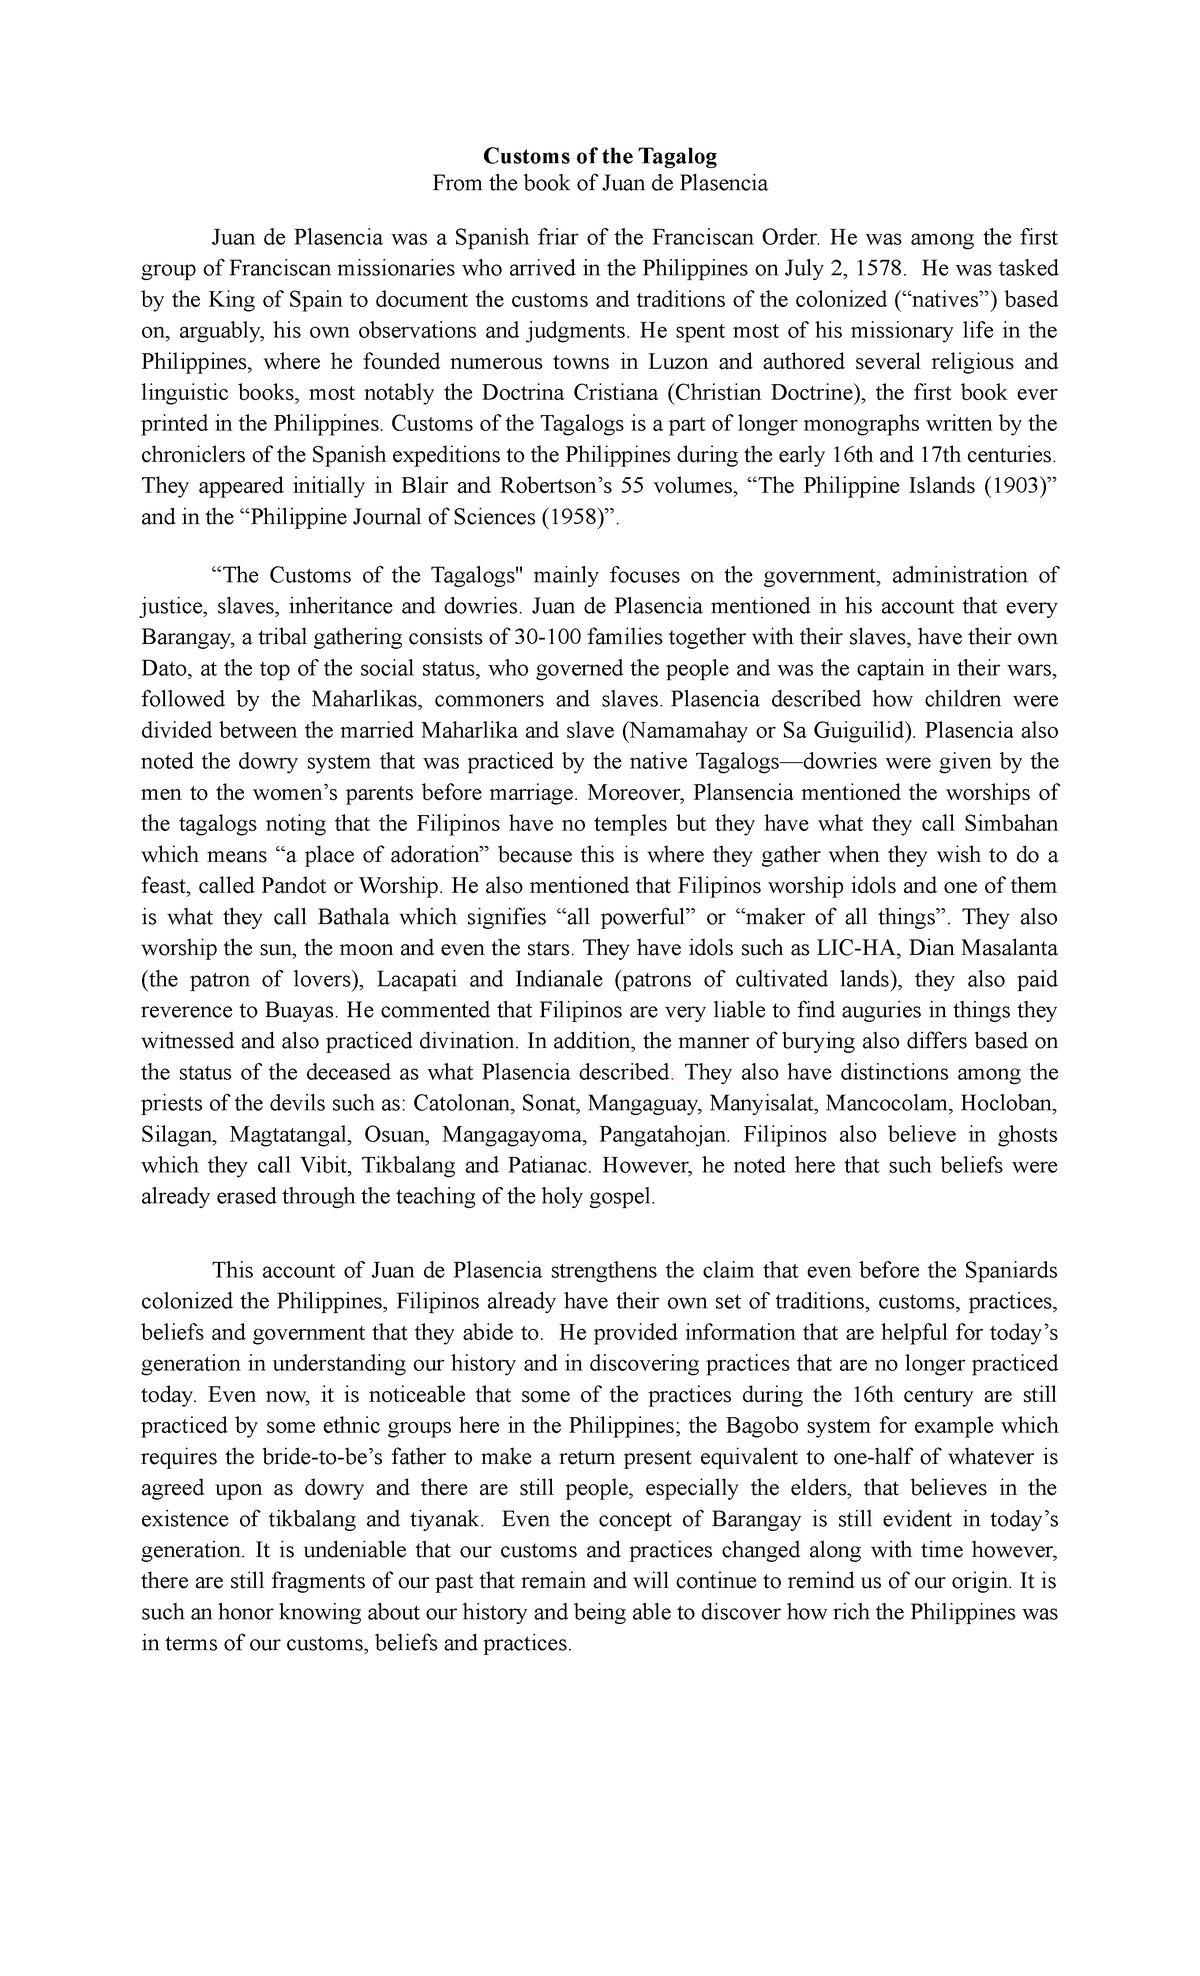 reflection paper essay tagalog